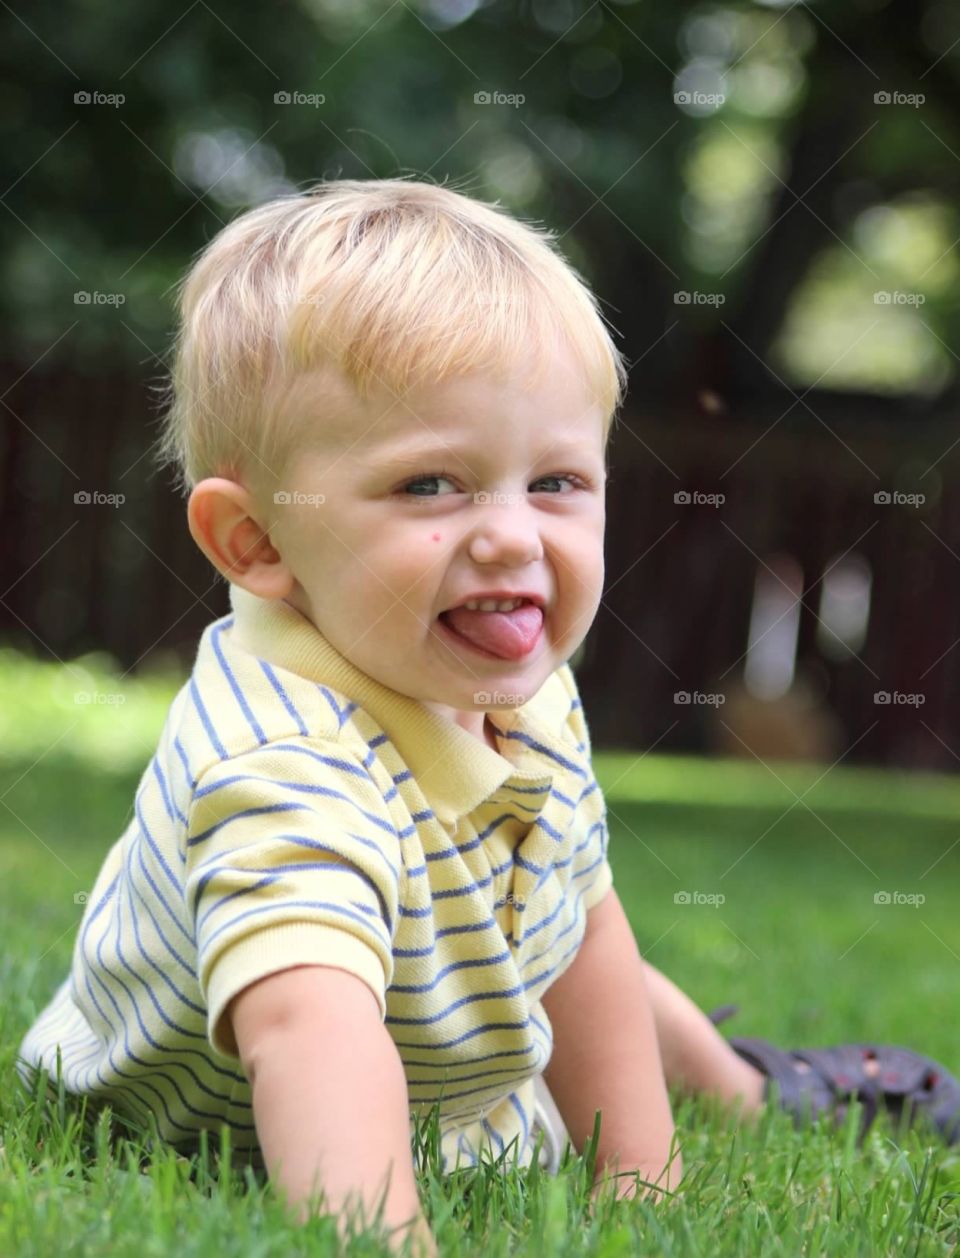 Cute boy playing in grass